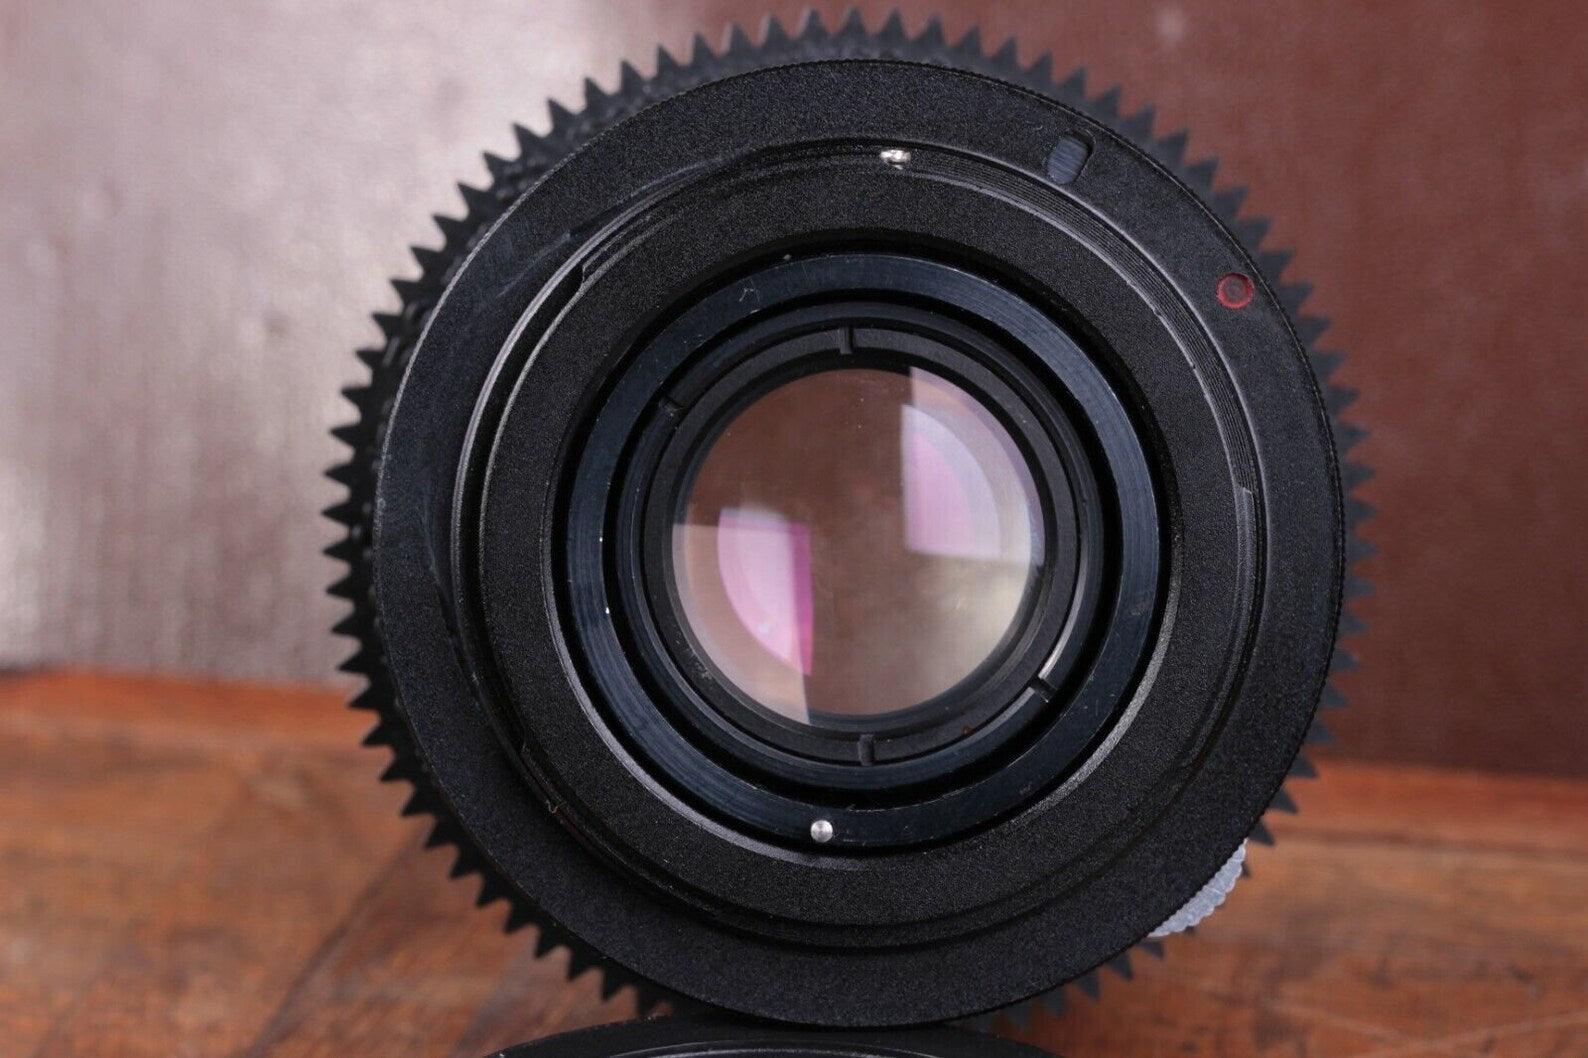 Helios 44M Soviet lens 58mm f/2 M42 mount Canon EF EOS adaptor.